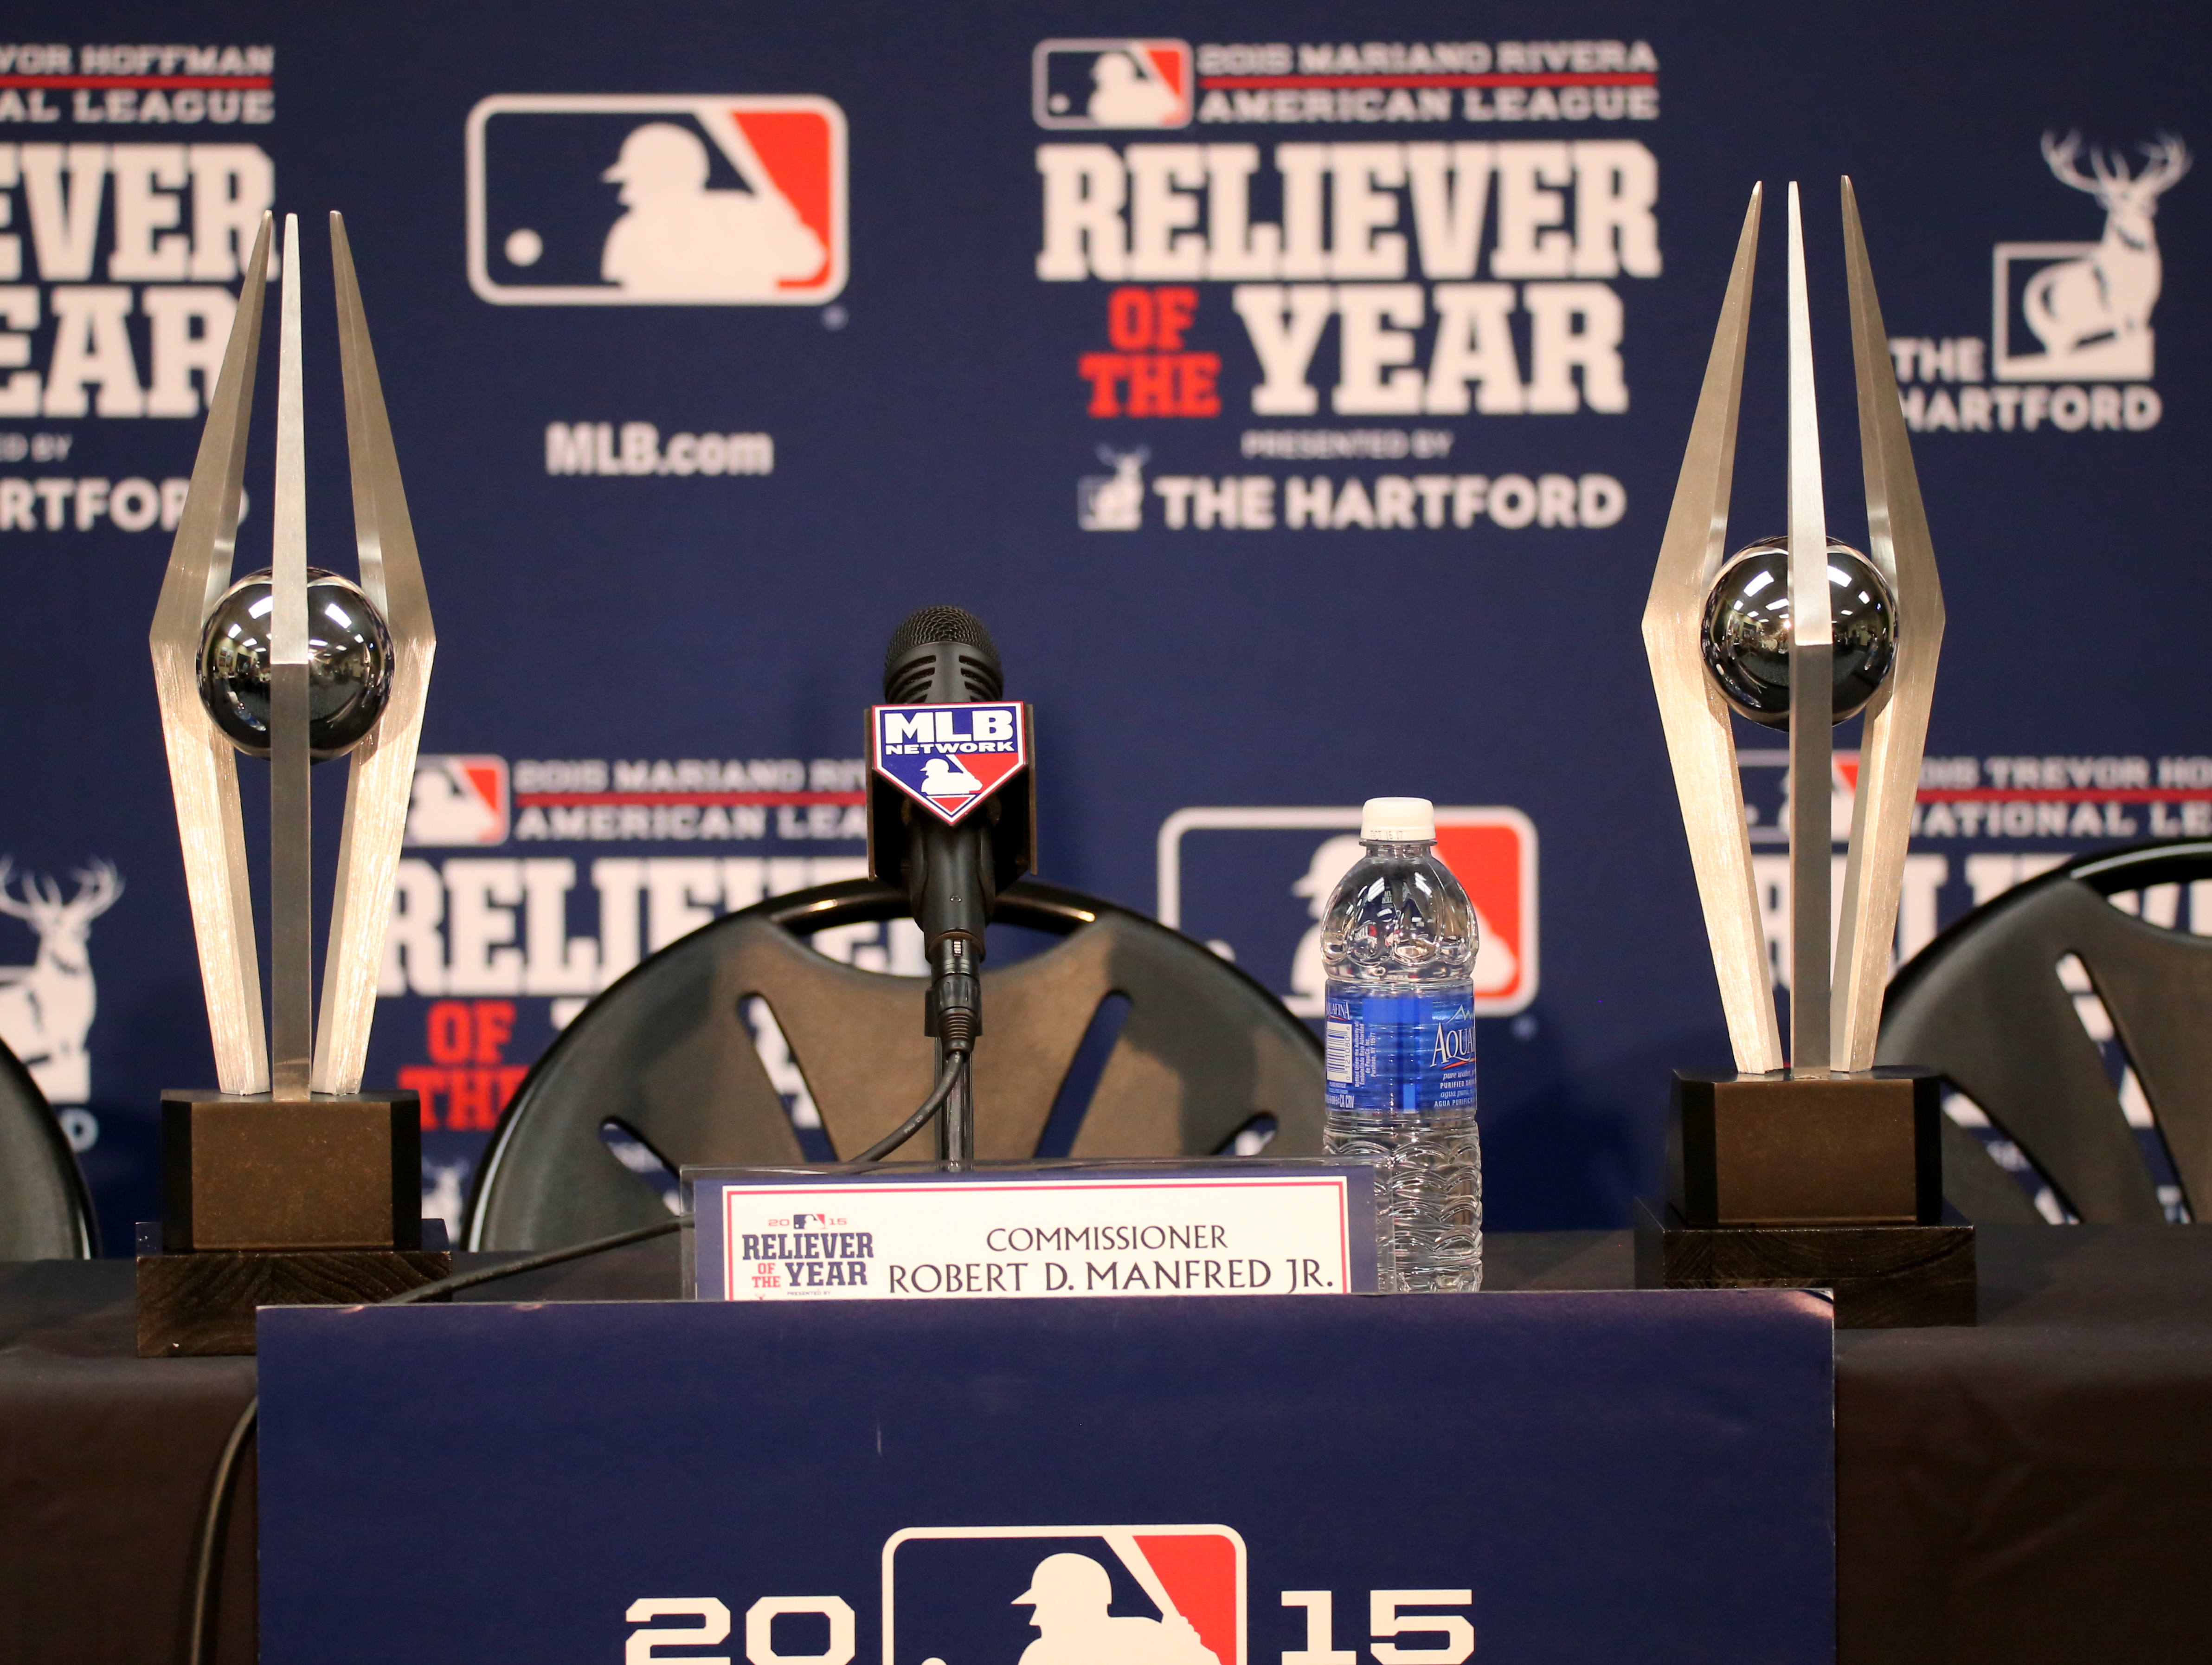 Major League Baseball Reliever of the Year Award - Wikipedia